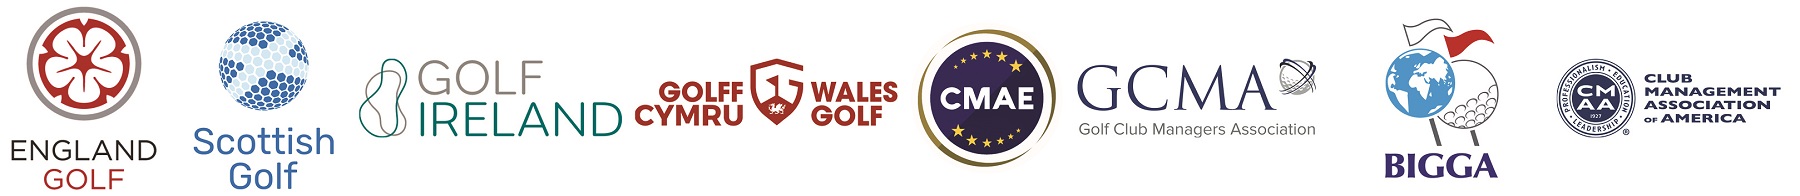 golf body logos - web